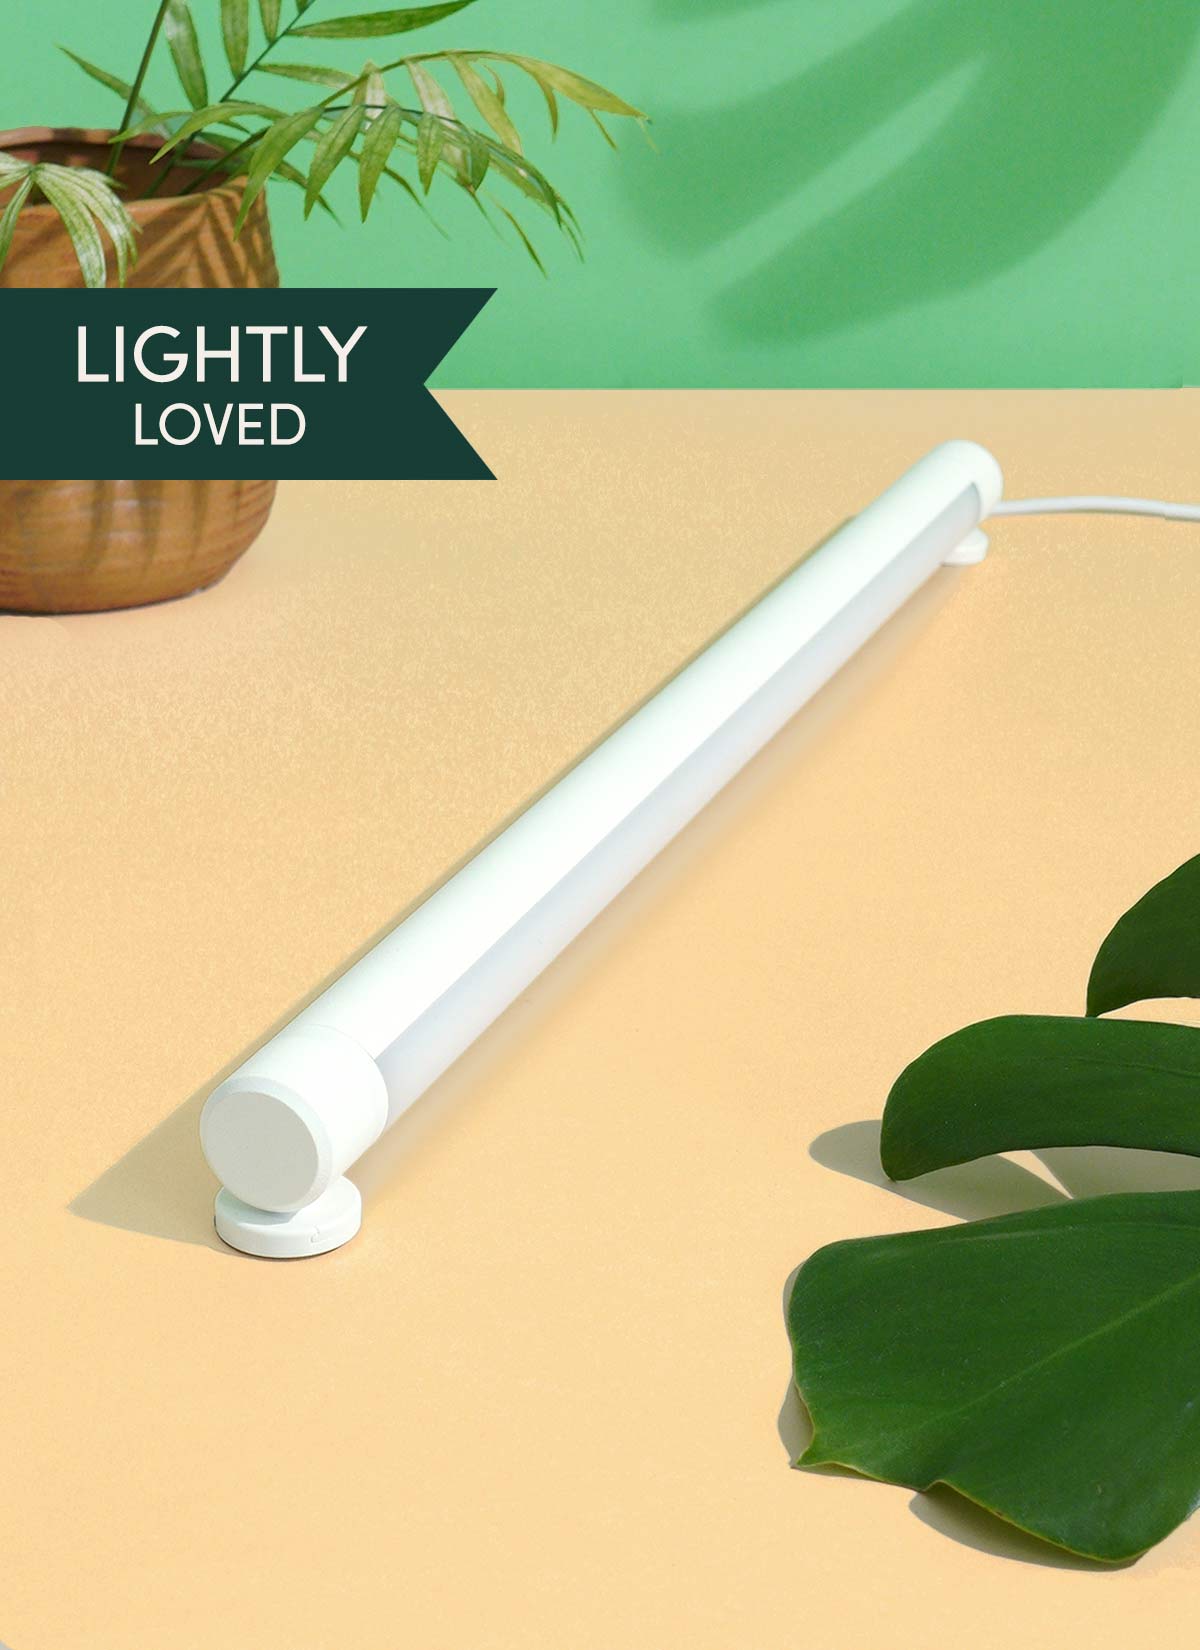 Refurbished Grove™ LED Grow Light - Lightly Loved